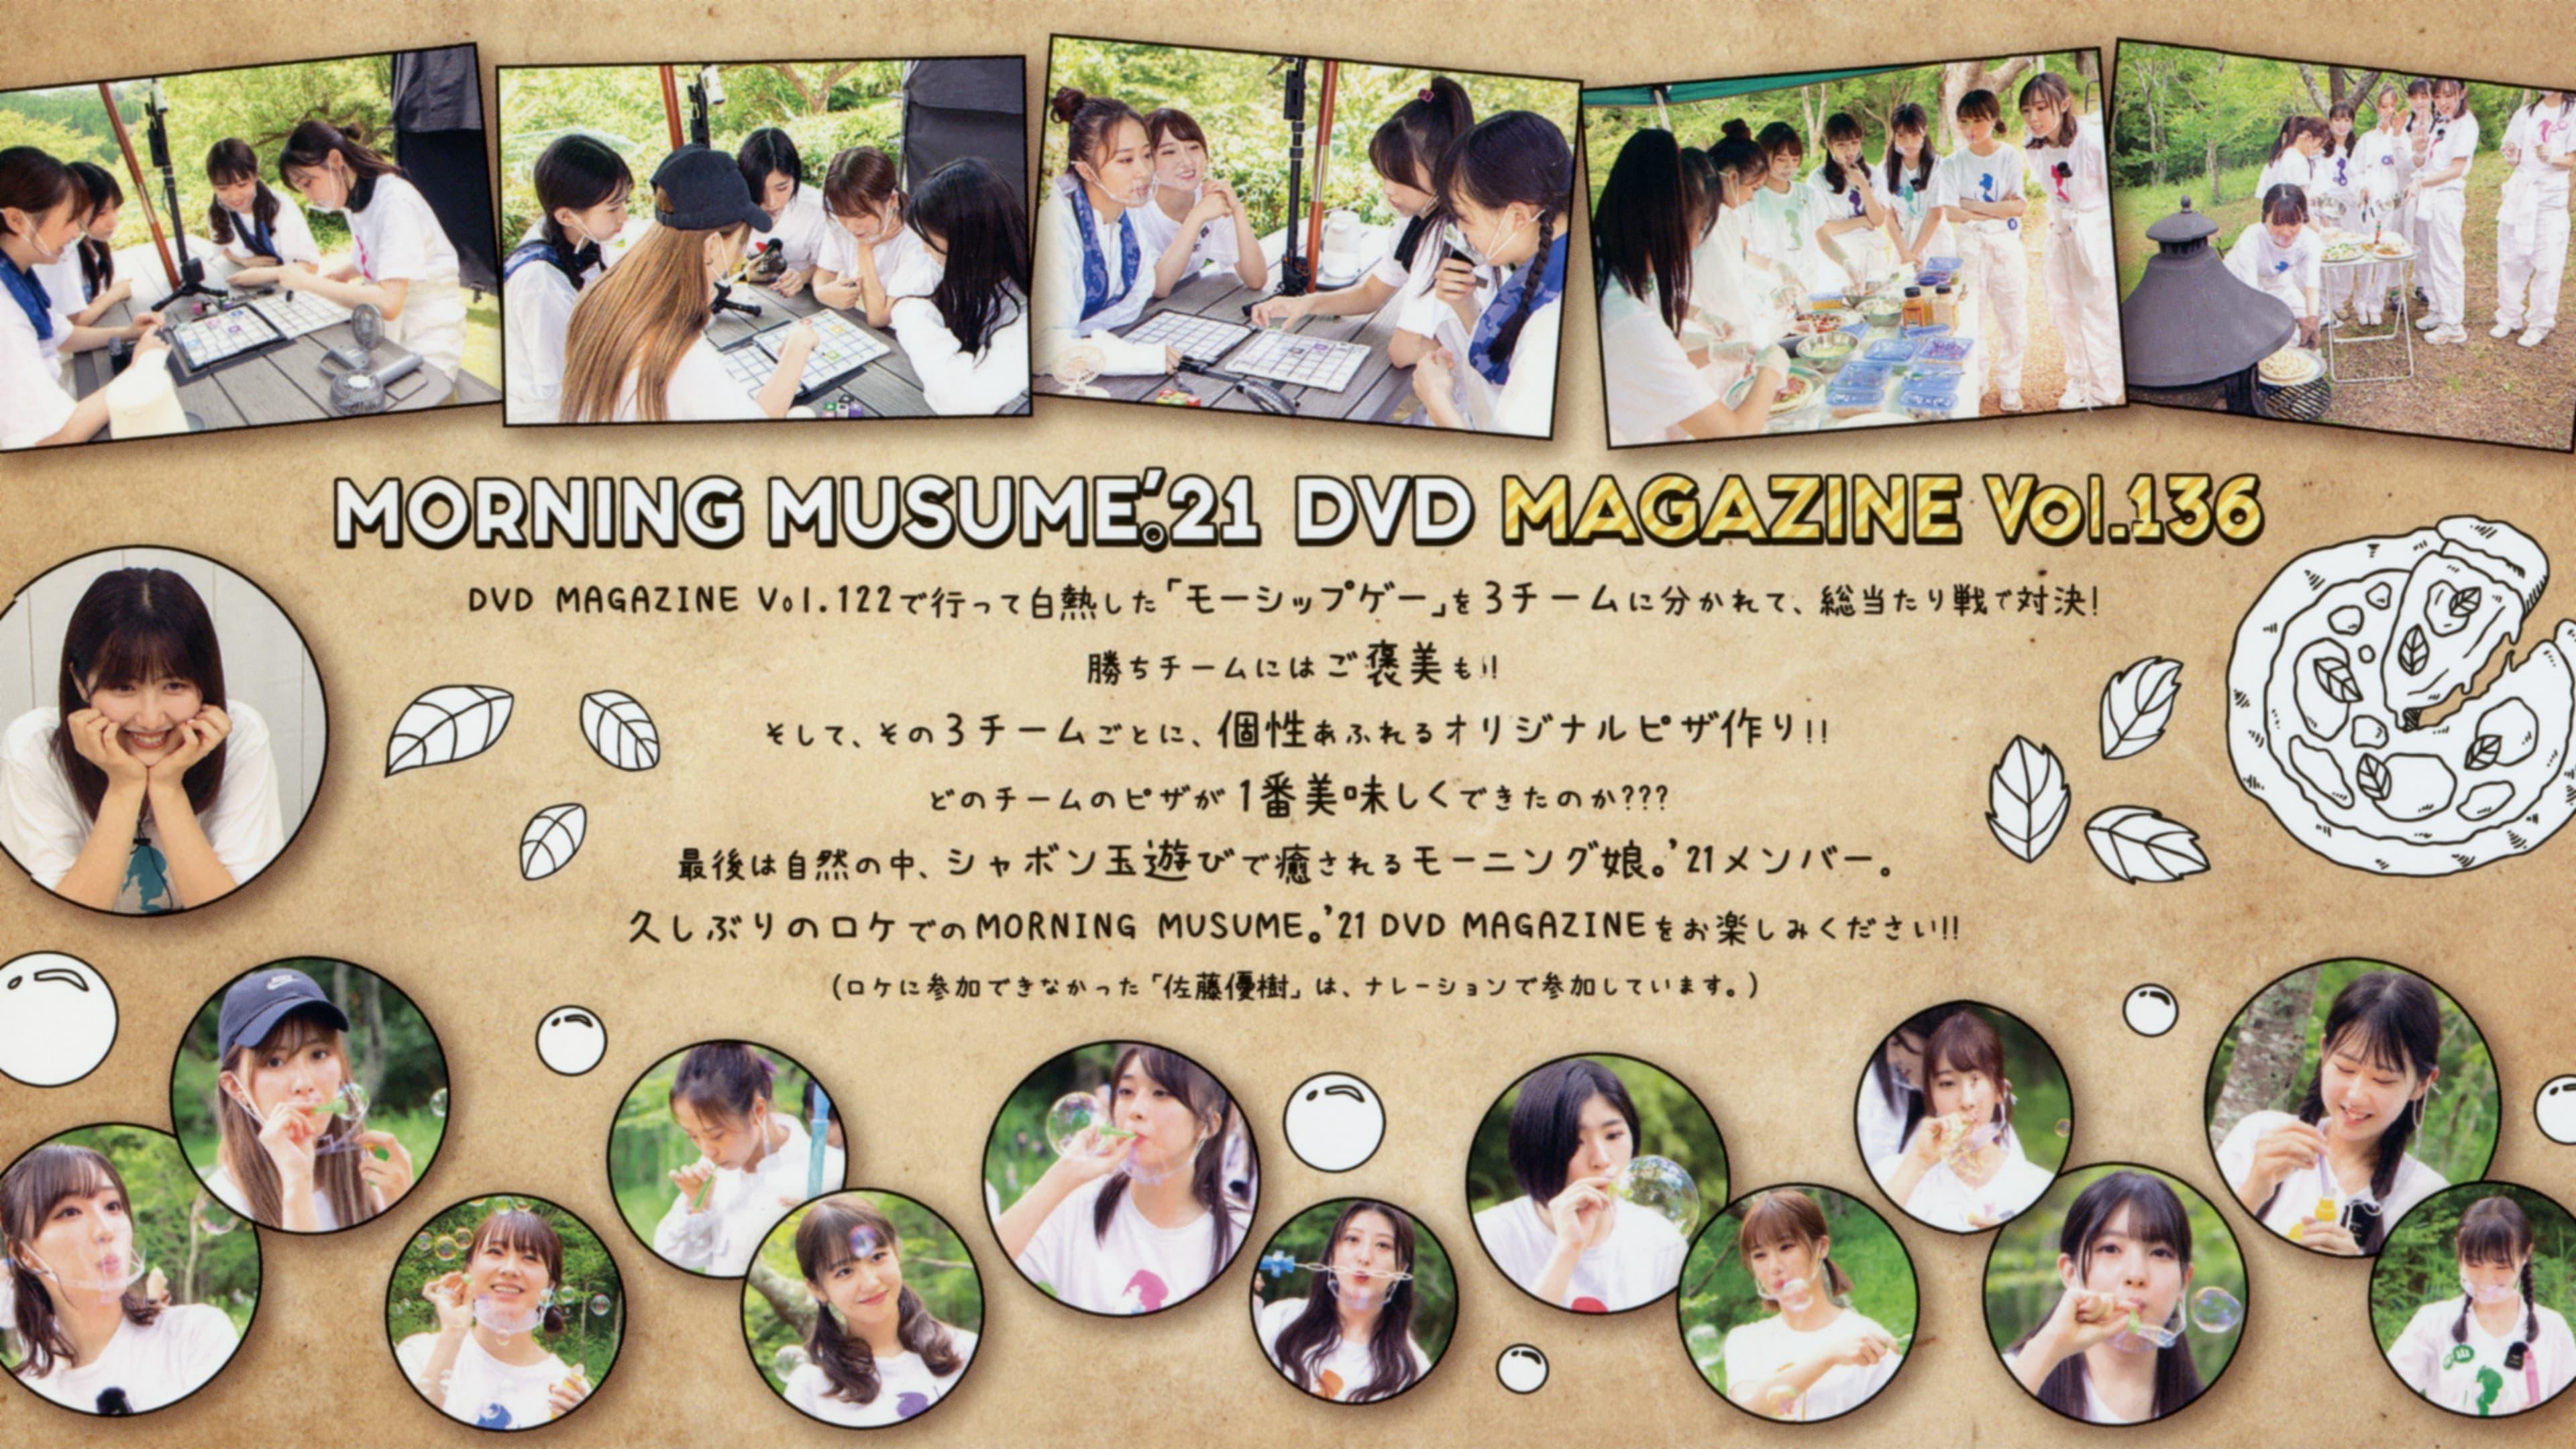 Morning Musume.'21 DVD Magazine Vol.136 backdrop